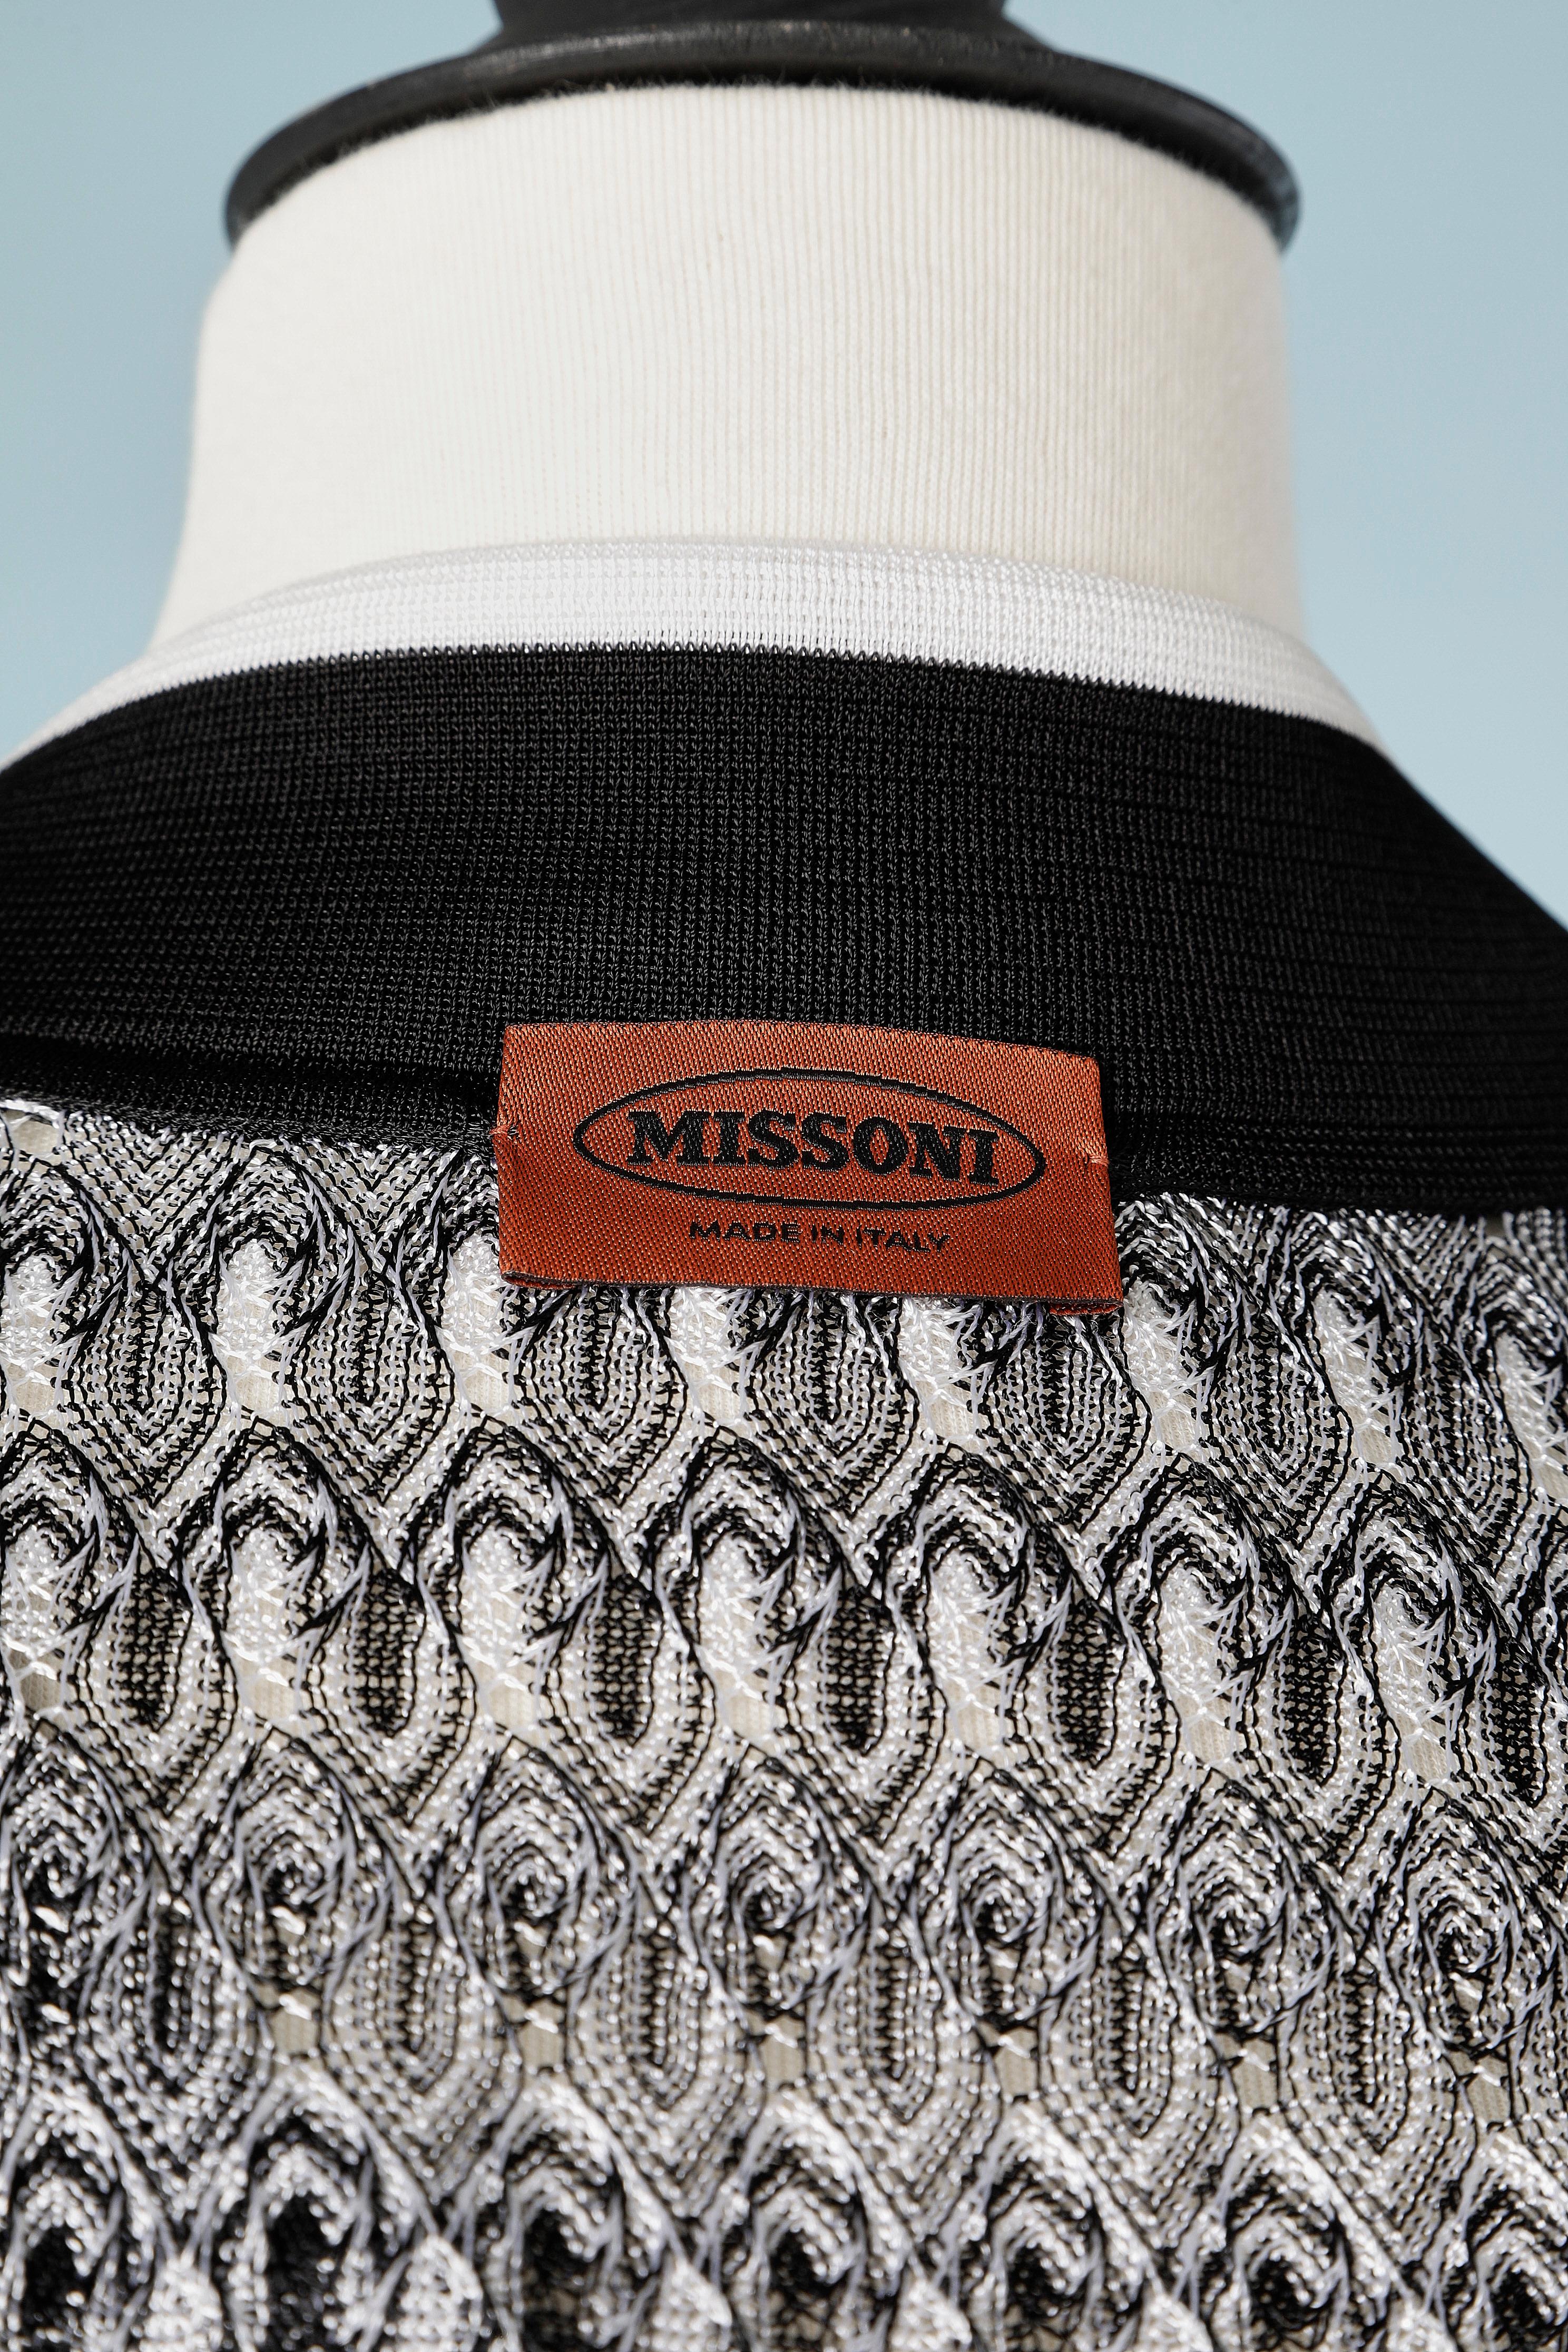 Black&white rayon jacquard knit sleeveless dress and cardigan ensemble Missoni  For Sale 1